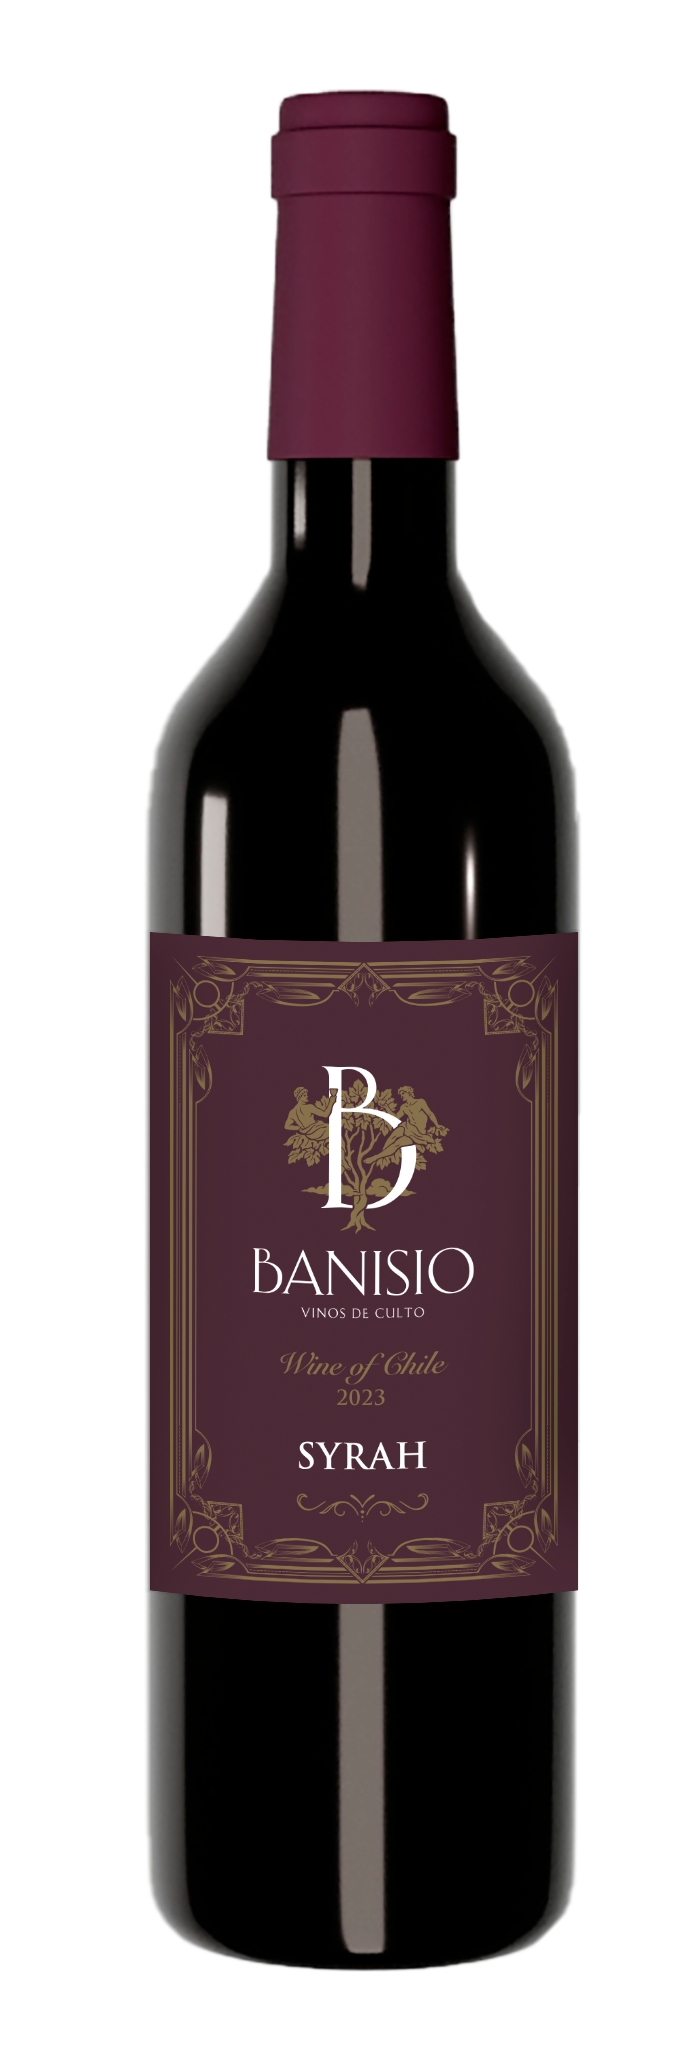 Wine from Chile, Syrah – Banisio